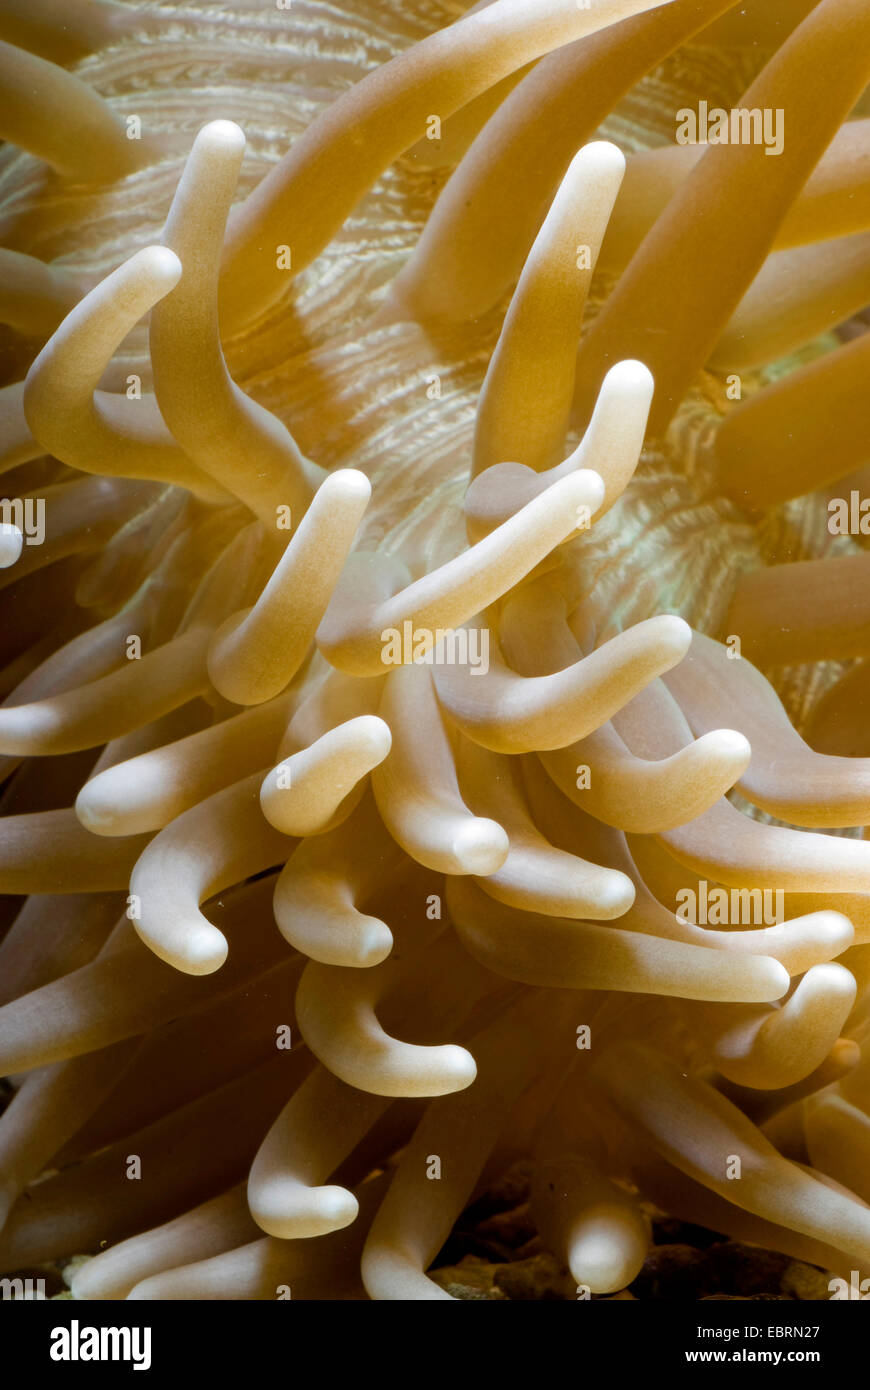 Leather anemone, Leathery sea anemone (Heteractis crispa), macro shot of a leathery sea anemone Stock Photo